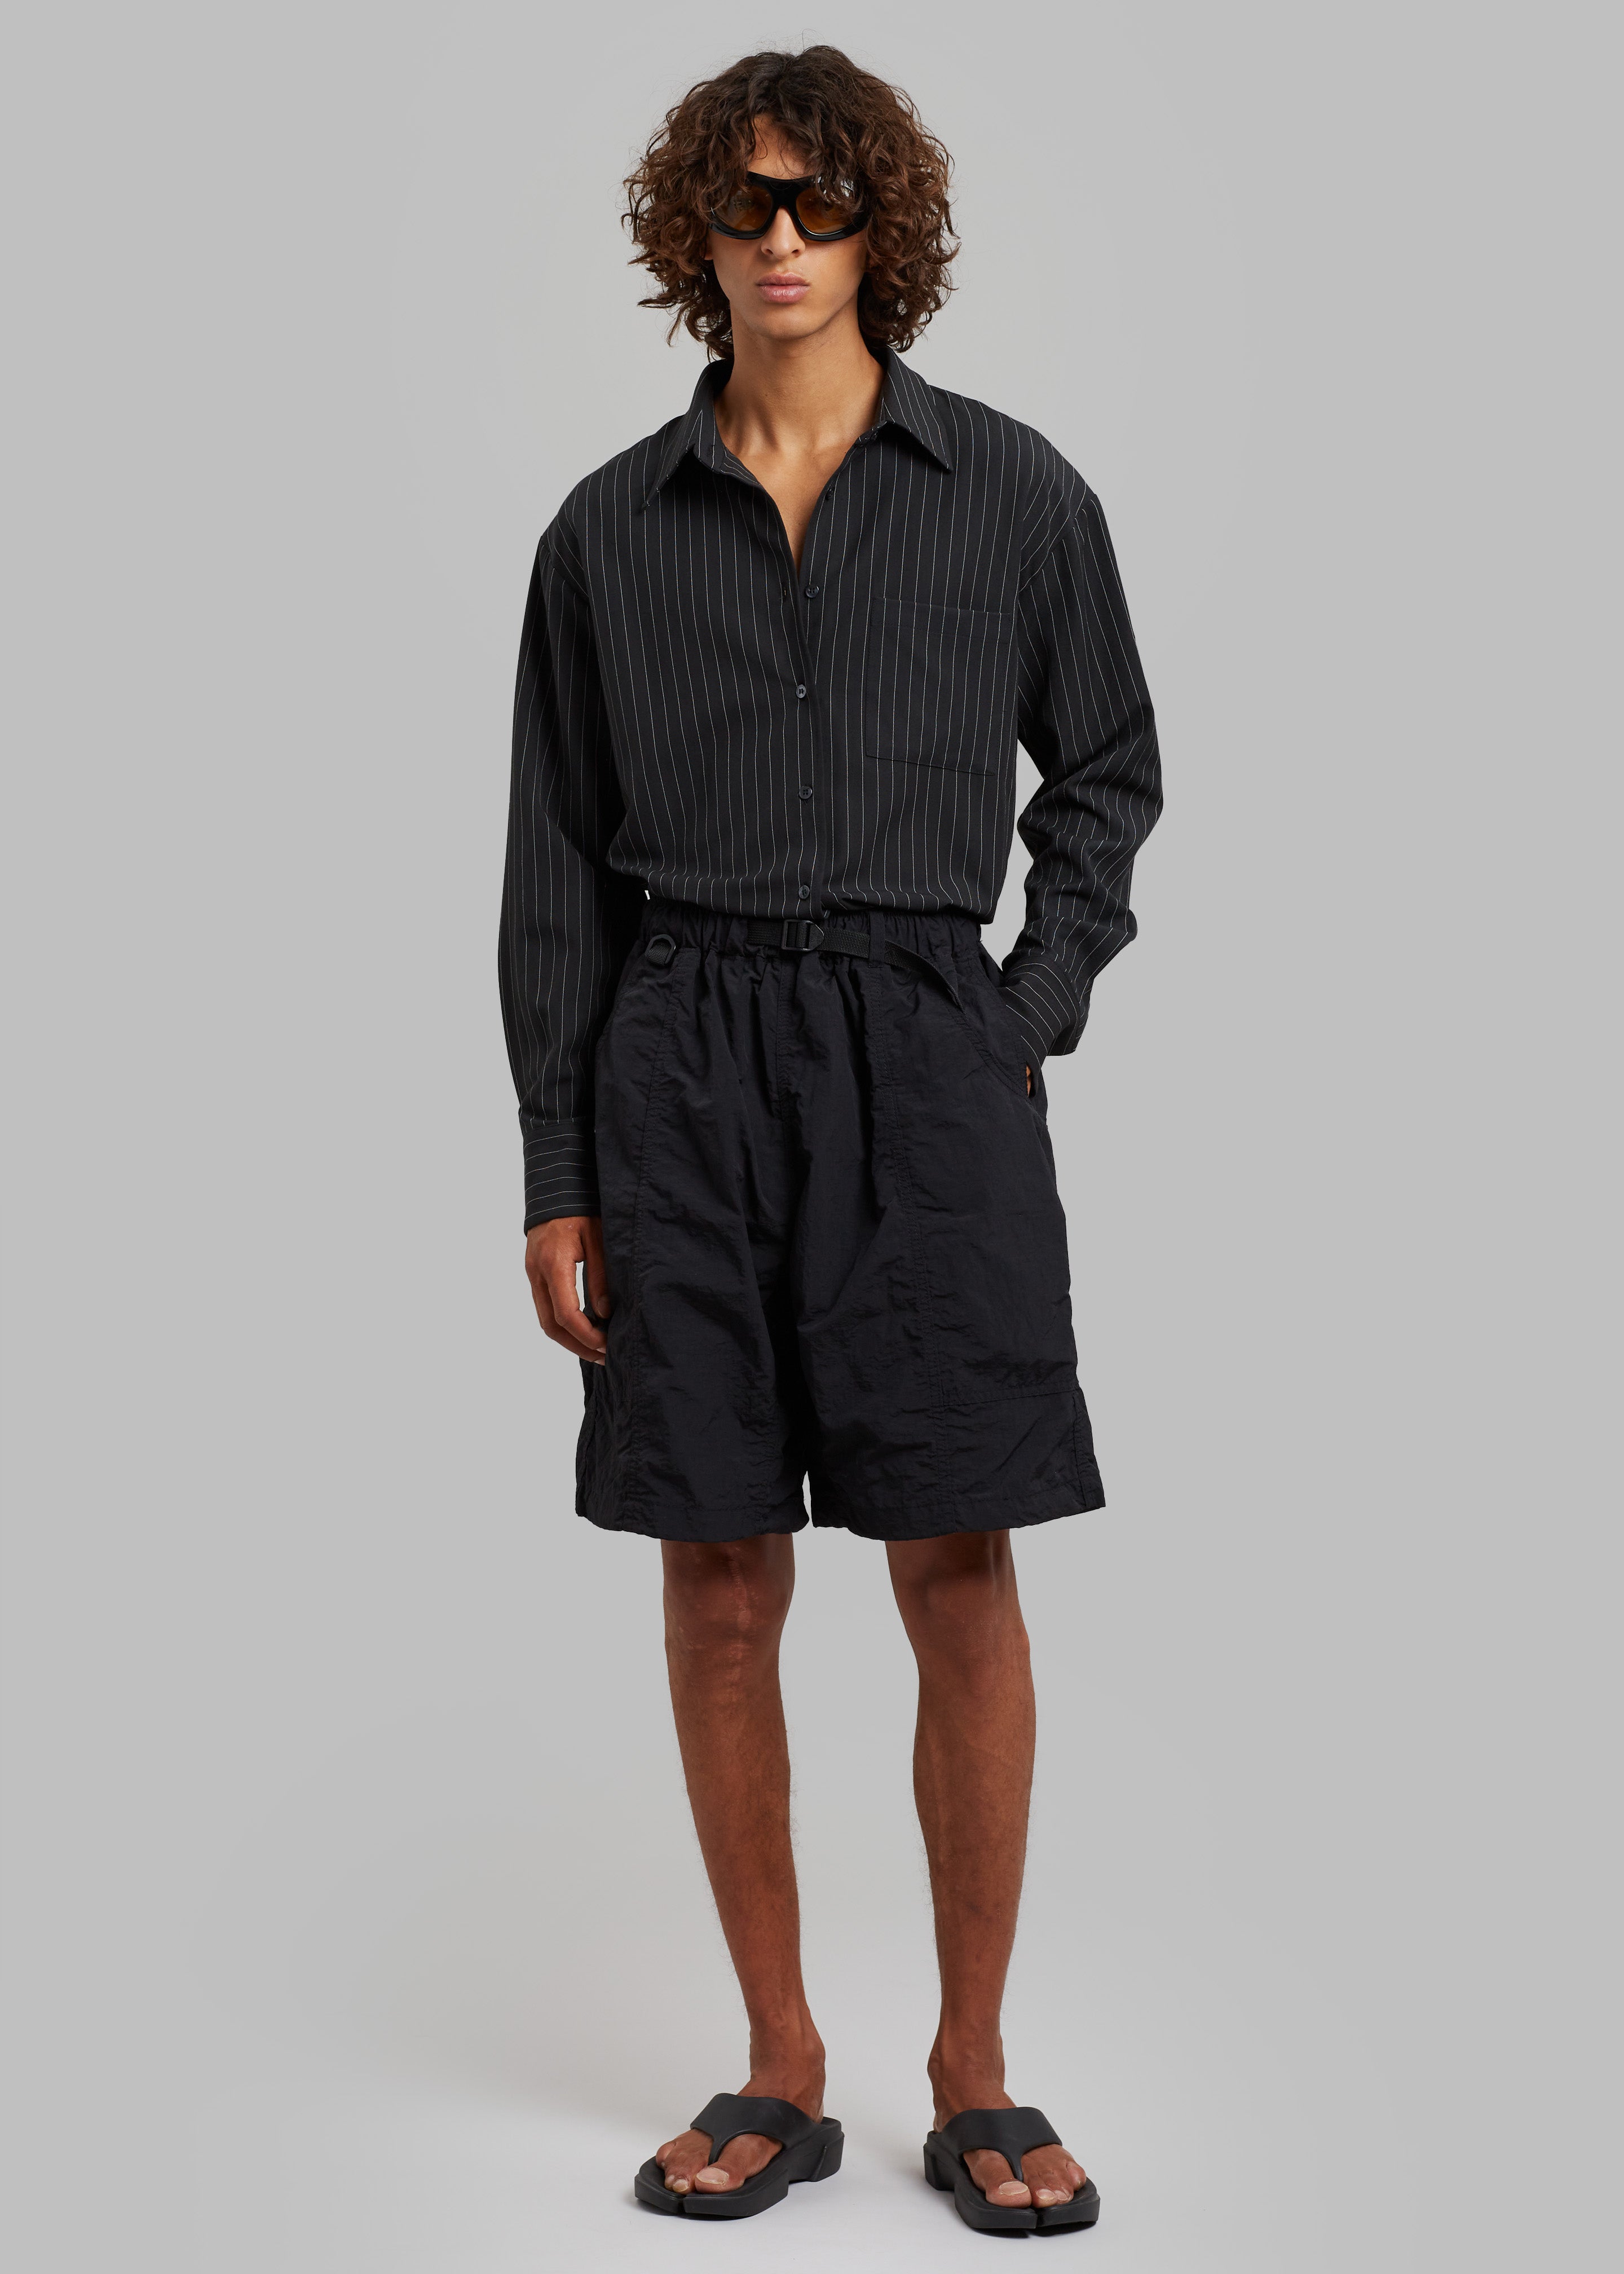 Arel Buckle Shorts - Black - 6